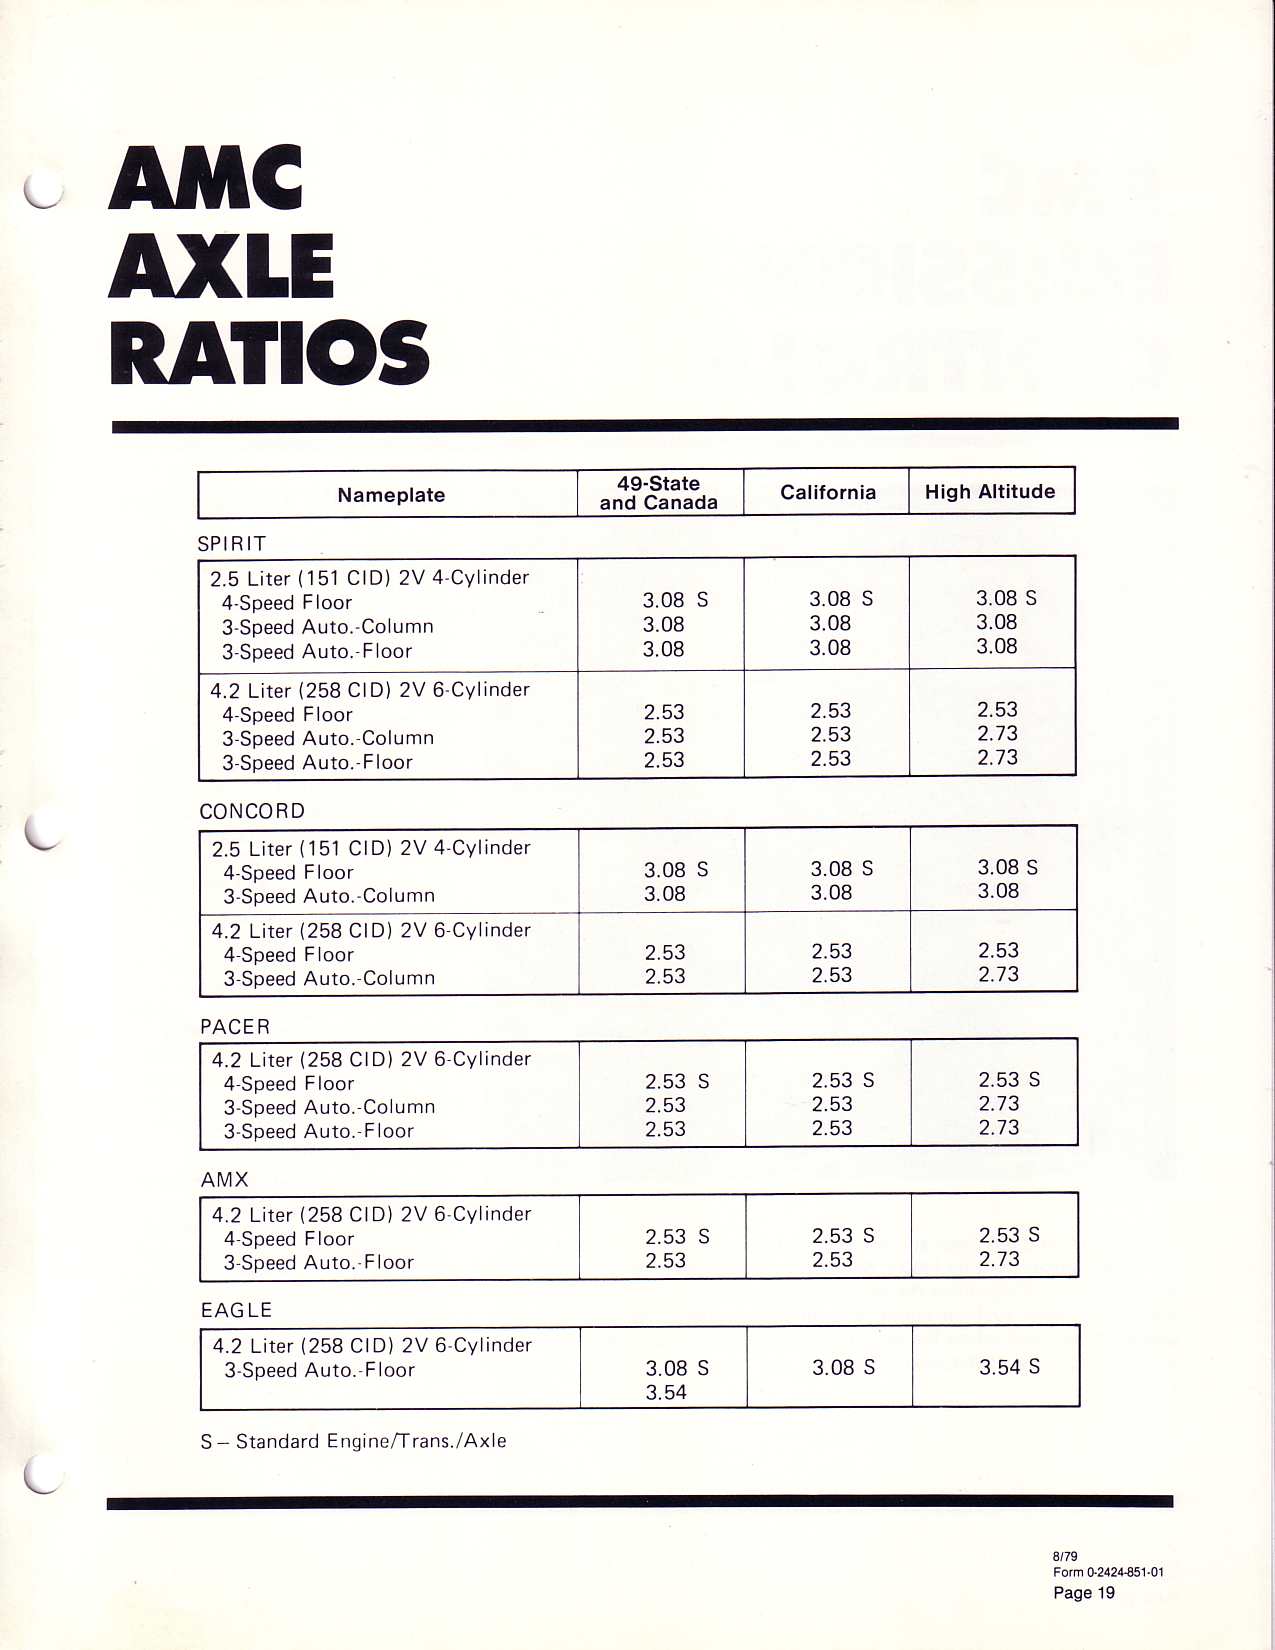 1980_AMC_Data_Book-B19